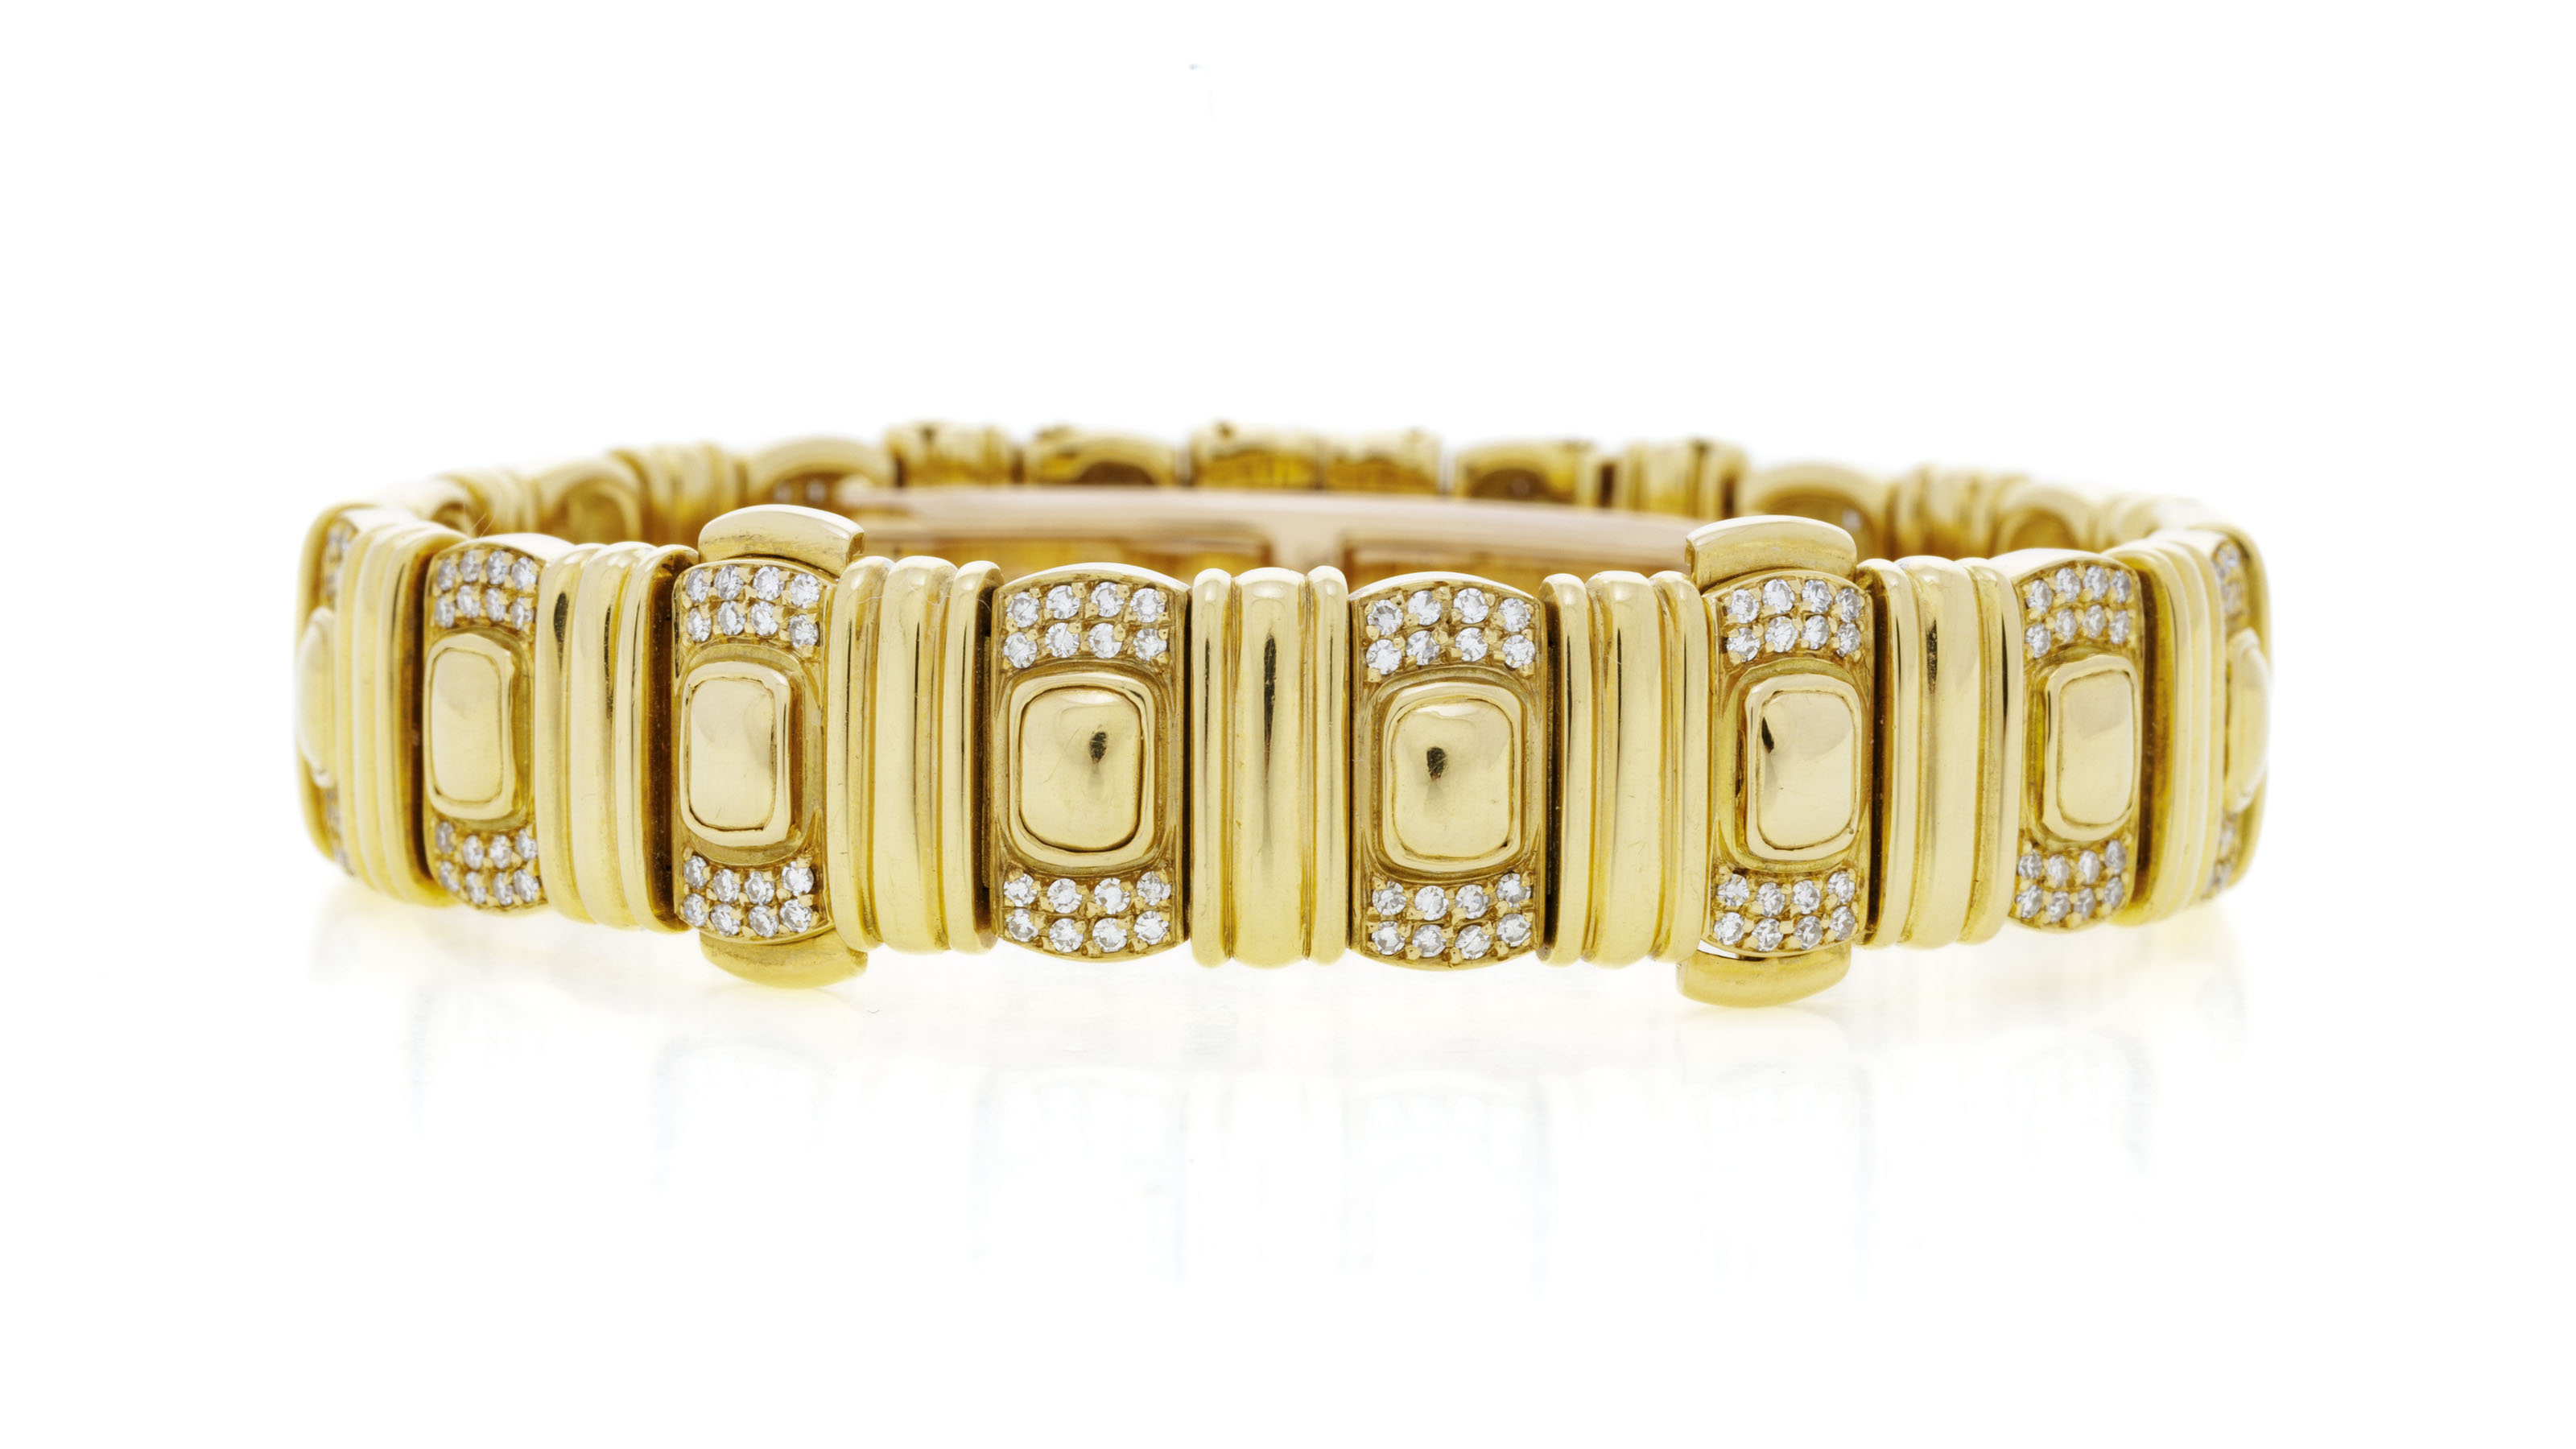 Cartier, Ellipse, montre-bracelet en or 750 sertie de diamants, transformable en bracelet - Image 5 of 6